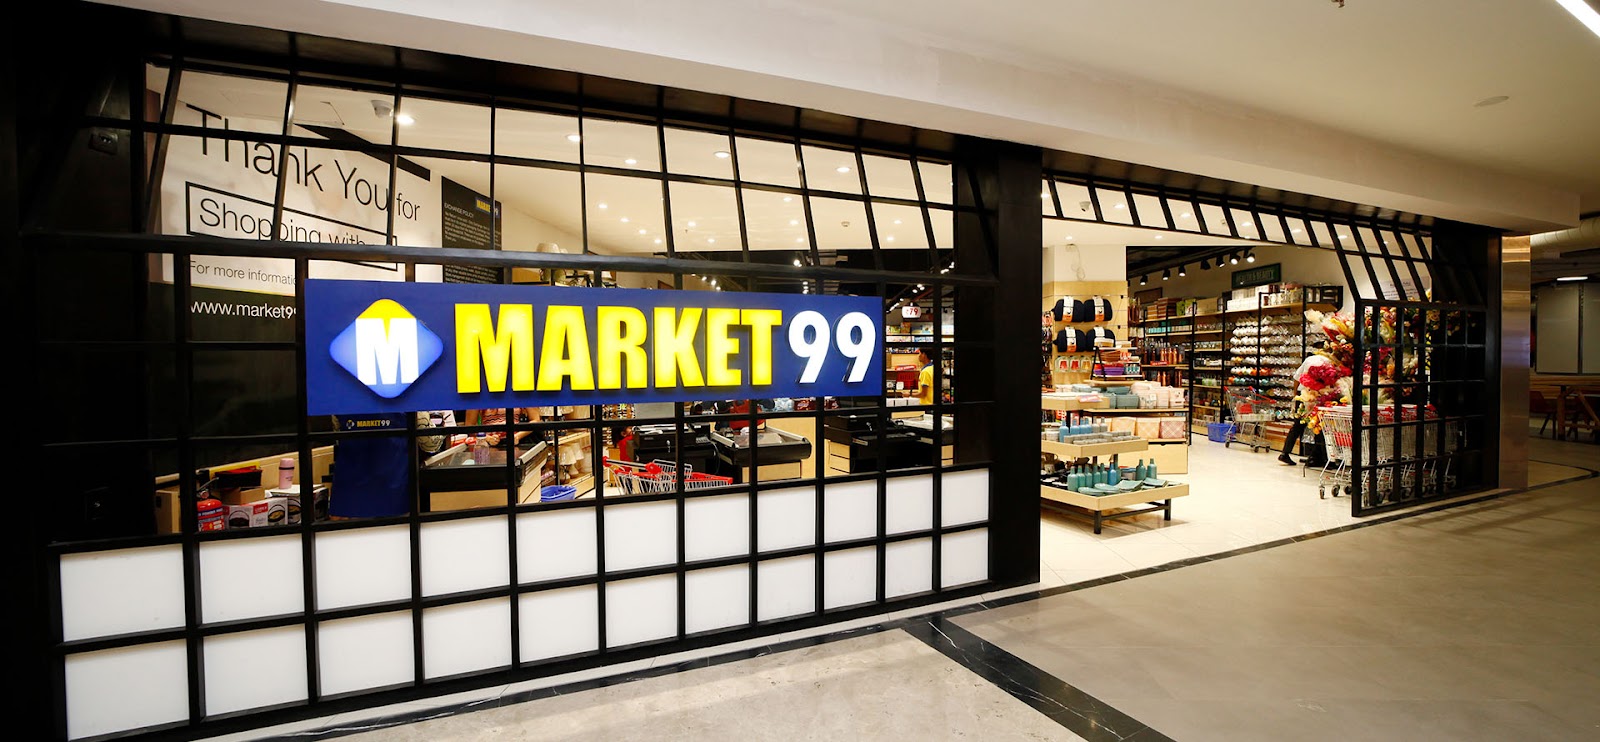 Market 99 Online Shopping